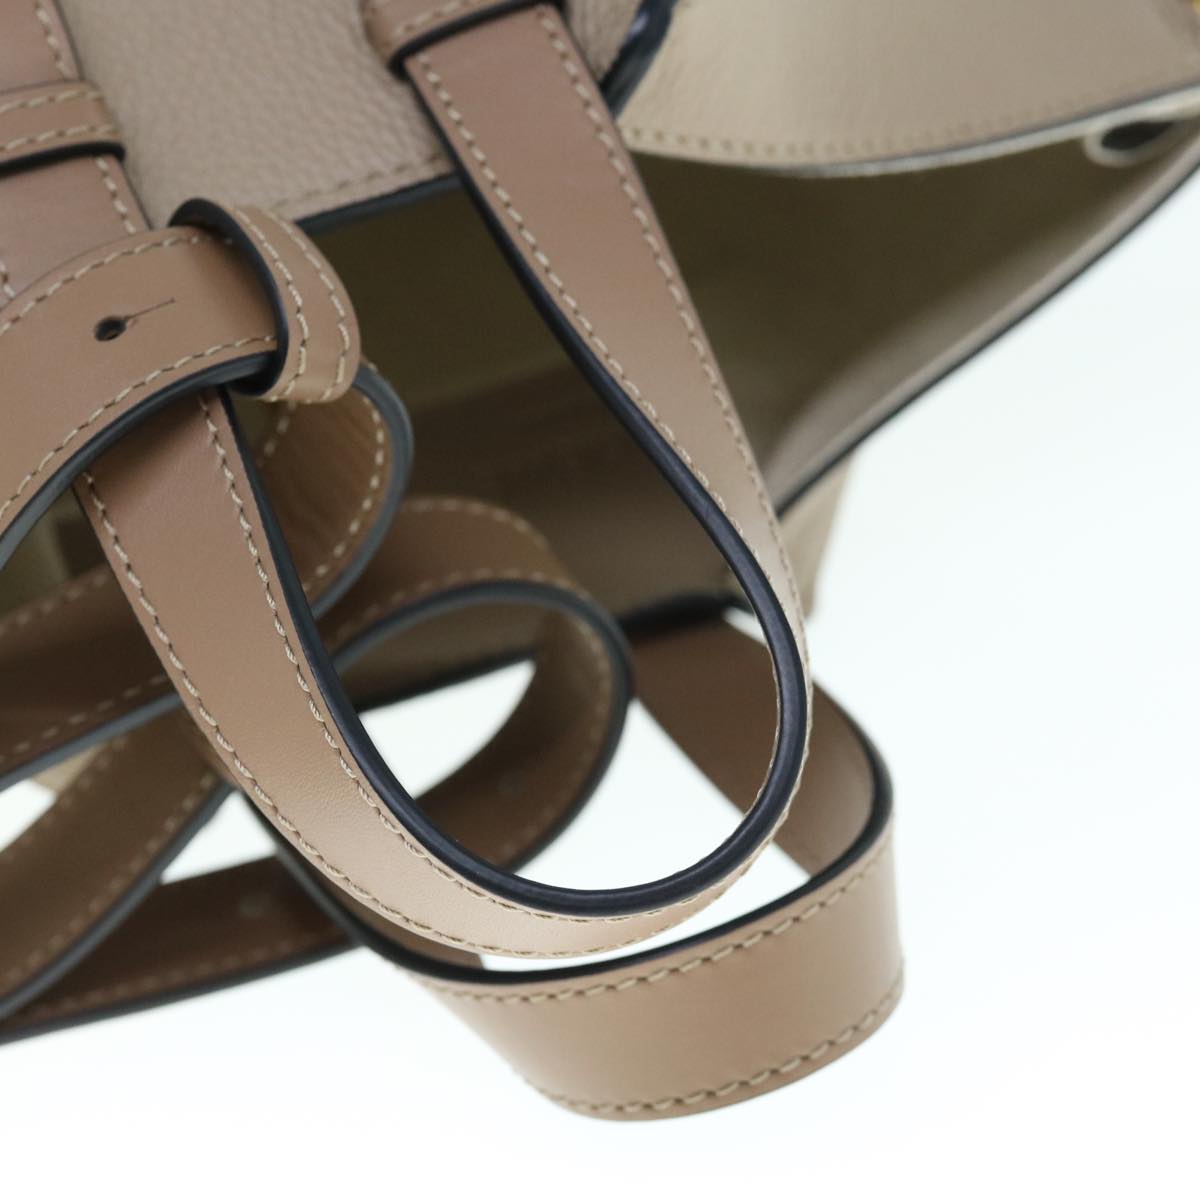 Loewe Women's Grey Leather Shoulder Bag with Versatile Shape in Grey